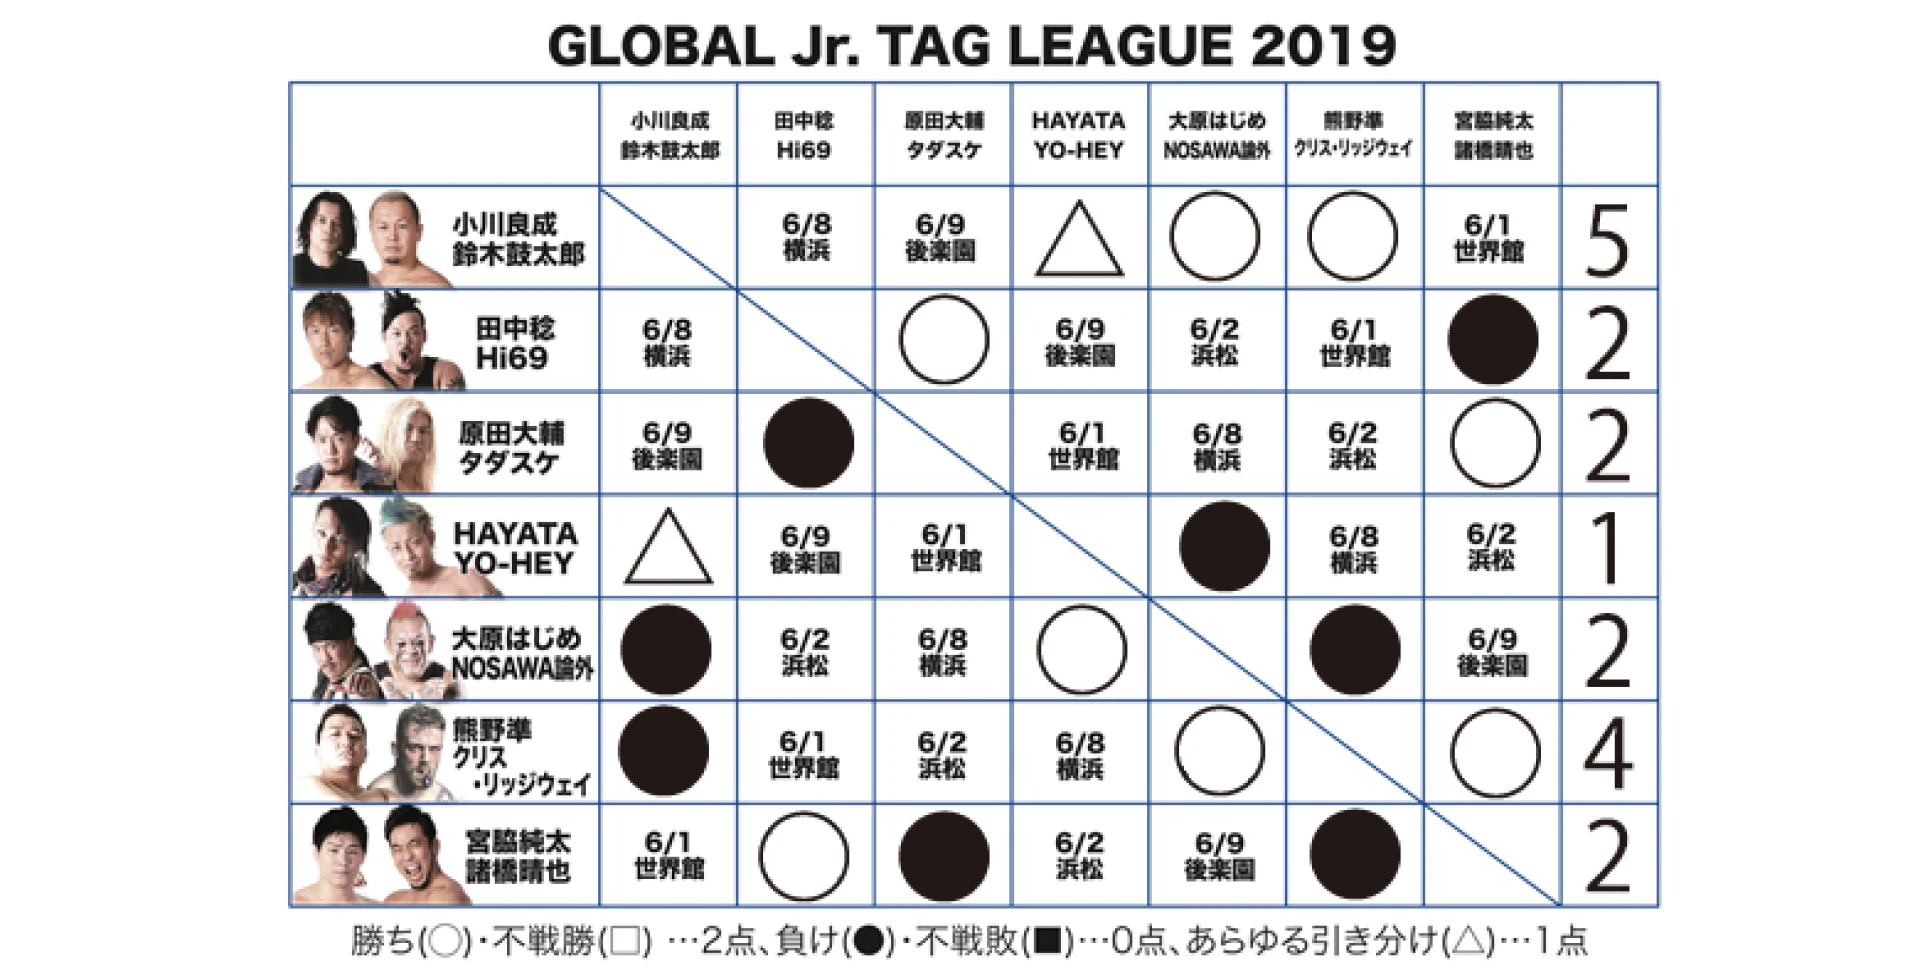 【5.31米子大会終了時の得点状況】『GLOBAL Jr. TAG LEAGUE 2019』得点表